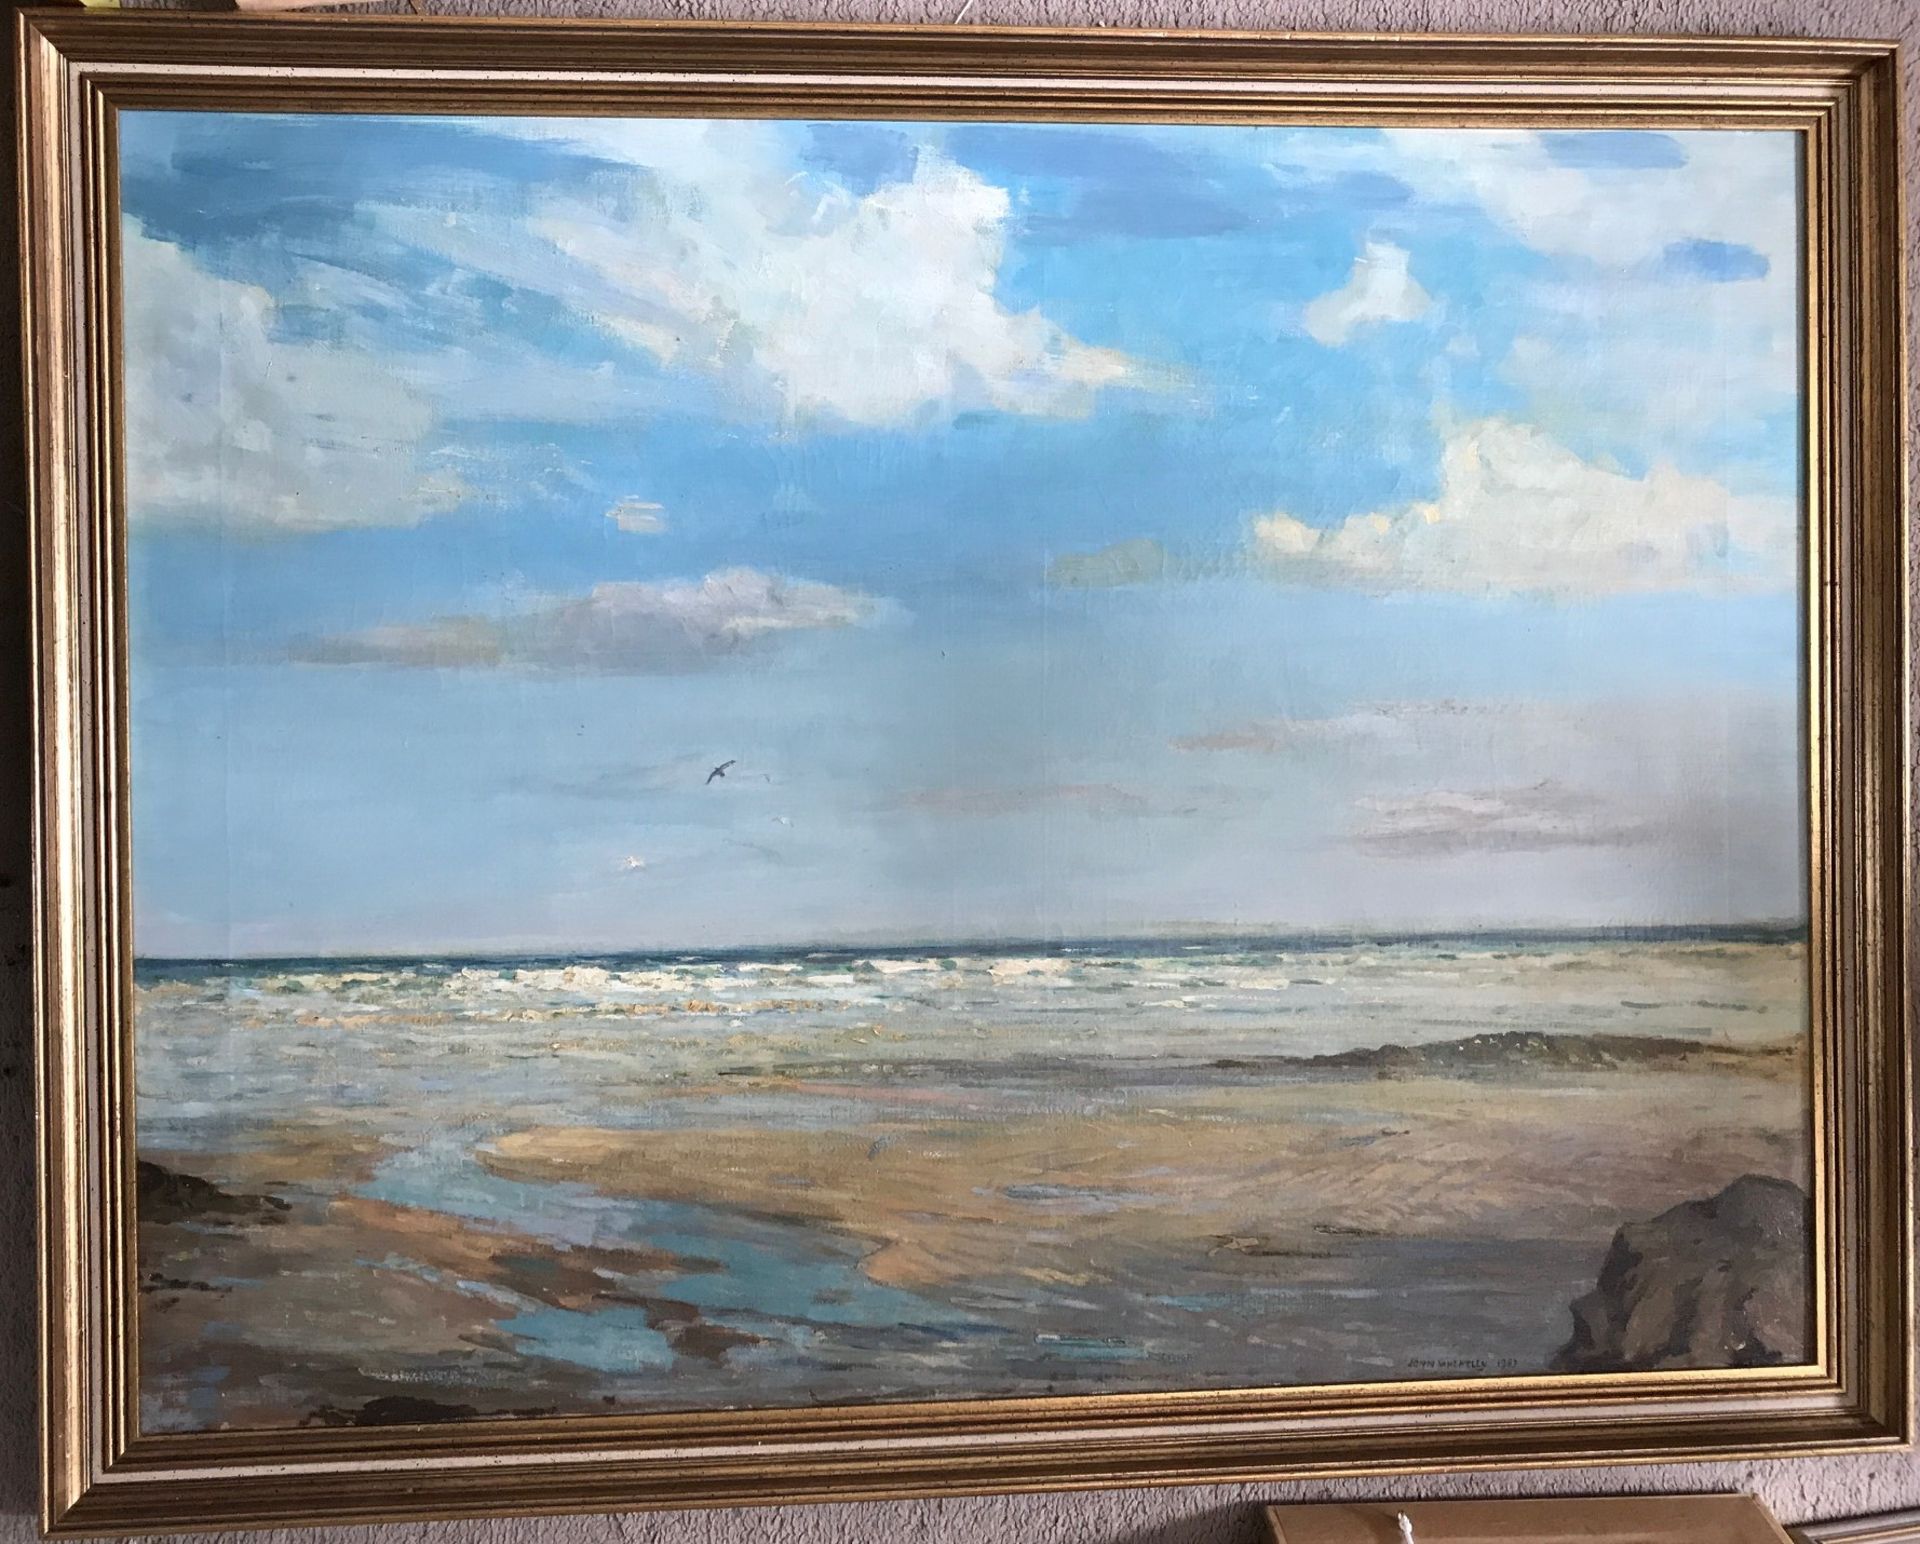 Seascape Mounts Bay Newlyn original oil painting by British artist John Wheatley 1892-1955 ARA, RWS - Image 2 of 4